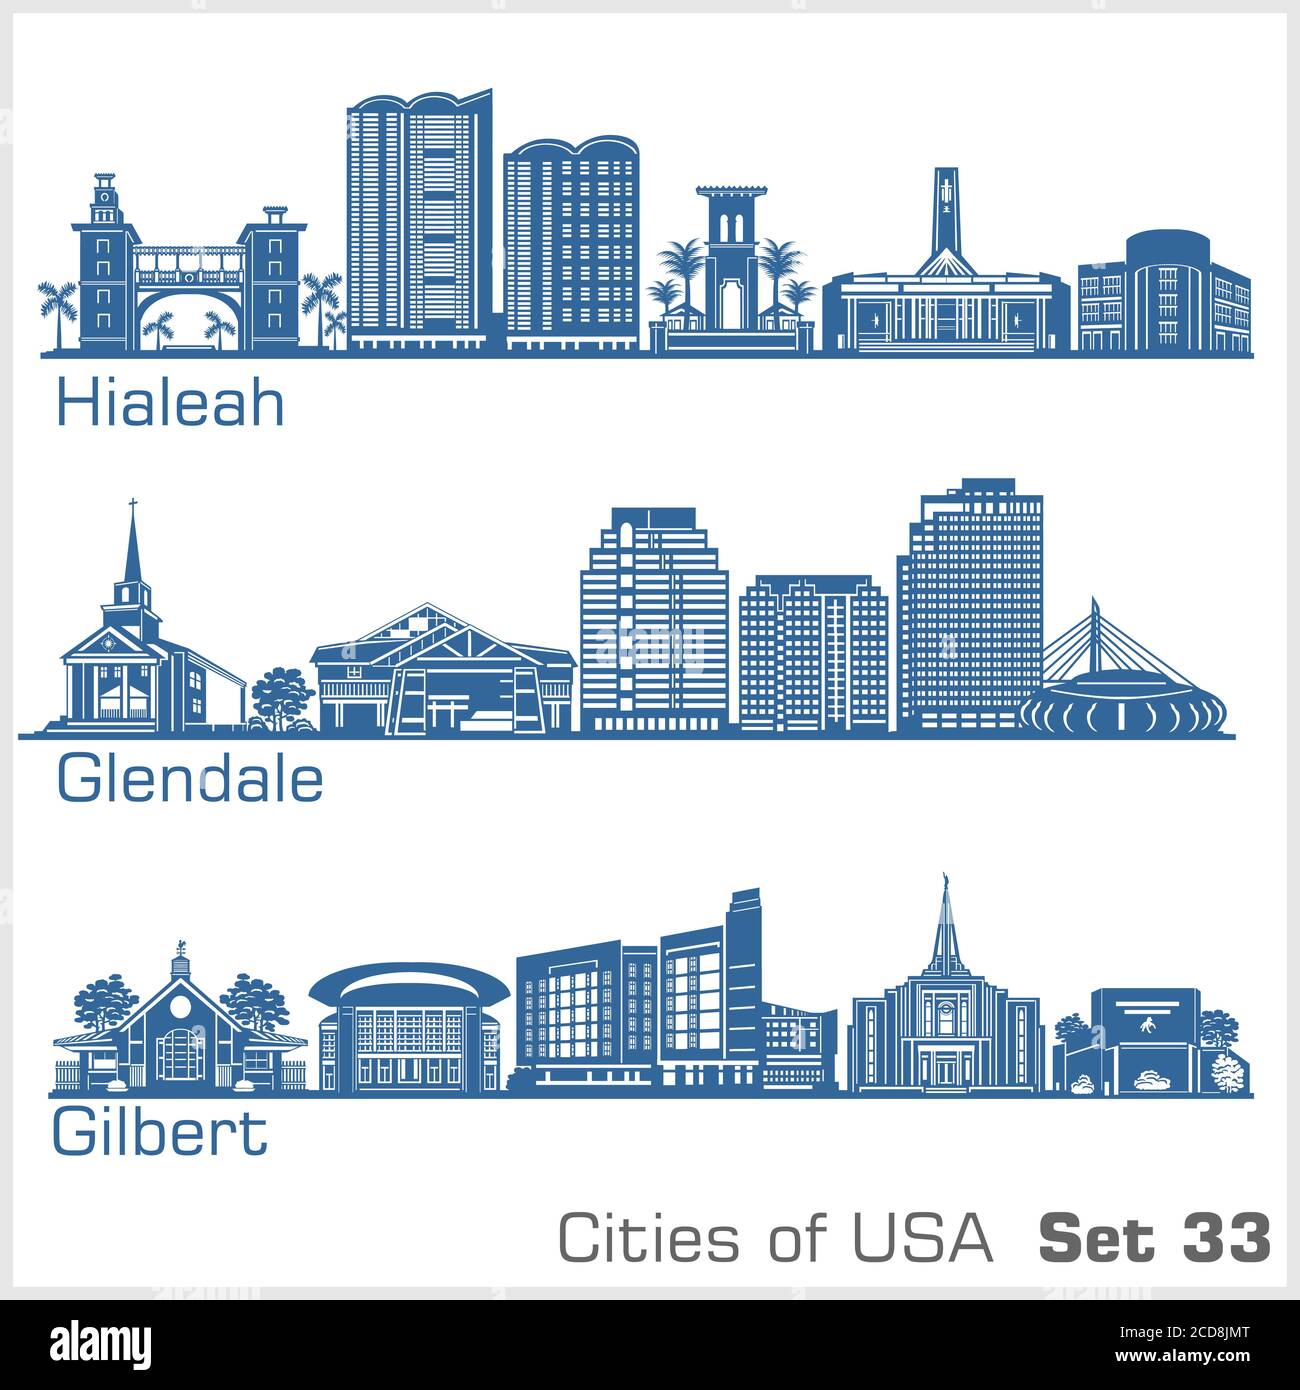 Città degli Stati Uniti - Hialeah, Glendale, Gilbert. Architettura dettagliata. Illustrazione vettoriale alla moda. Illustrazione Vettoriale